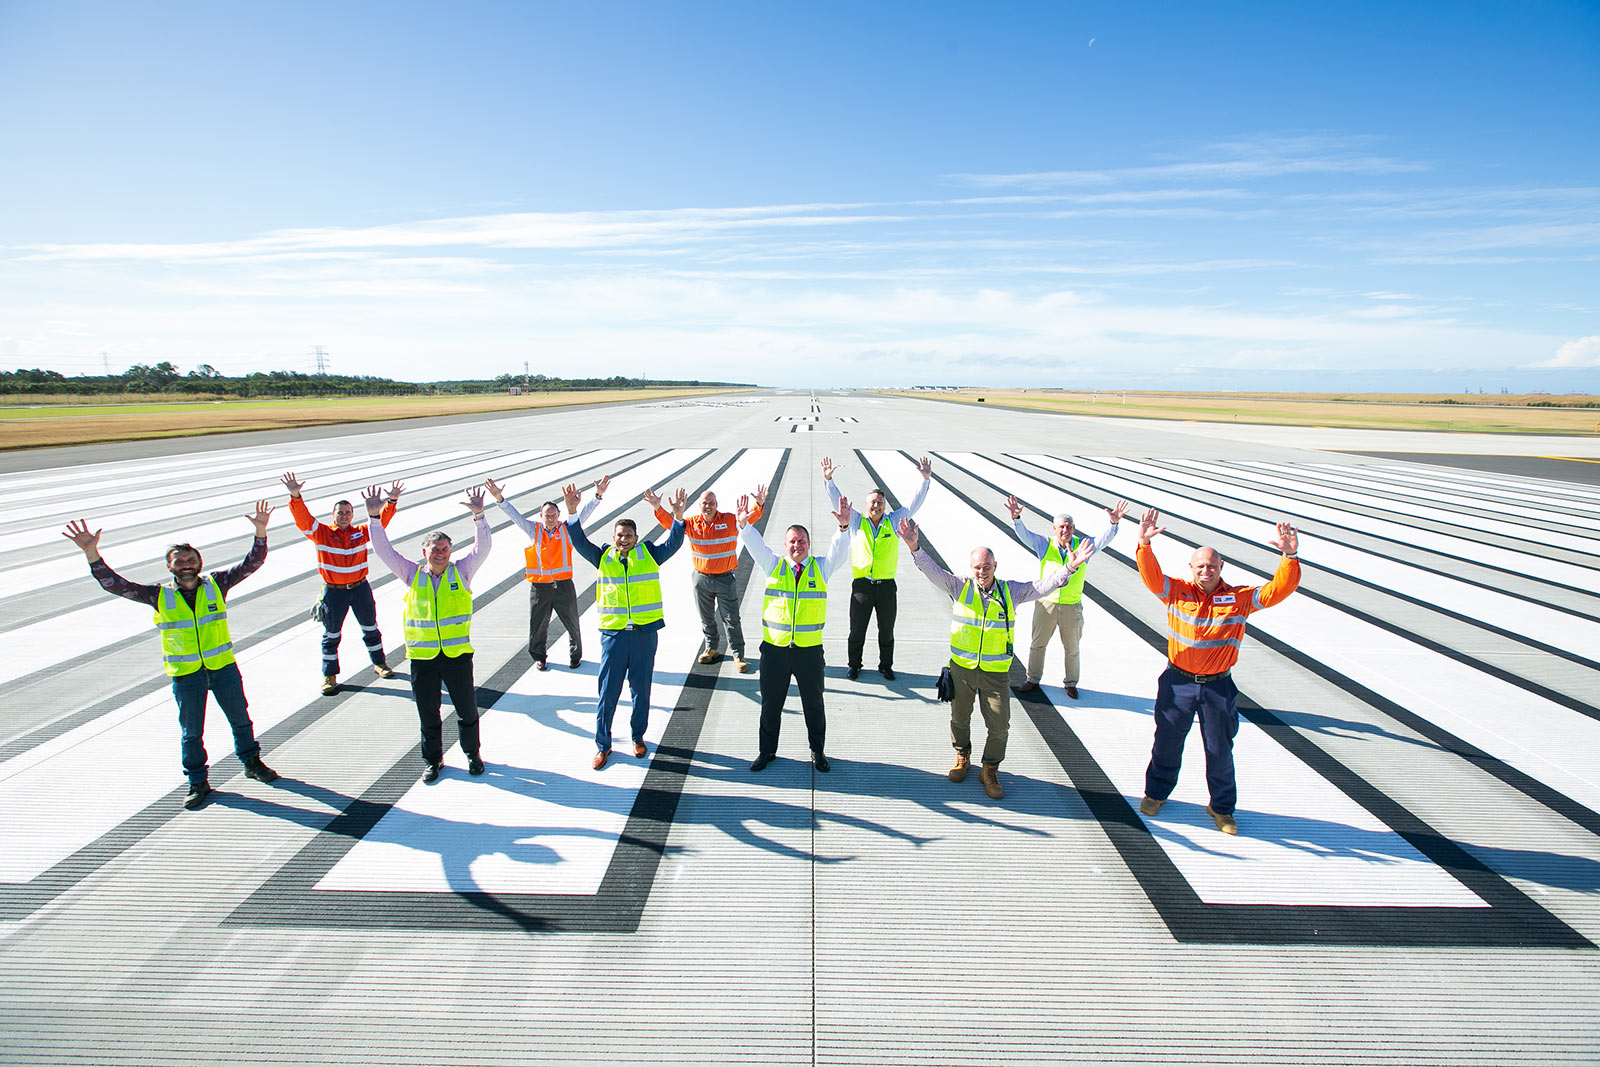 The new runway landed under budget at $1.1 billion